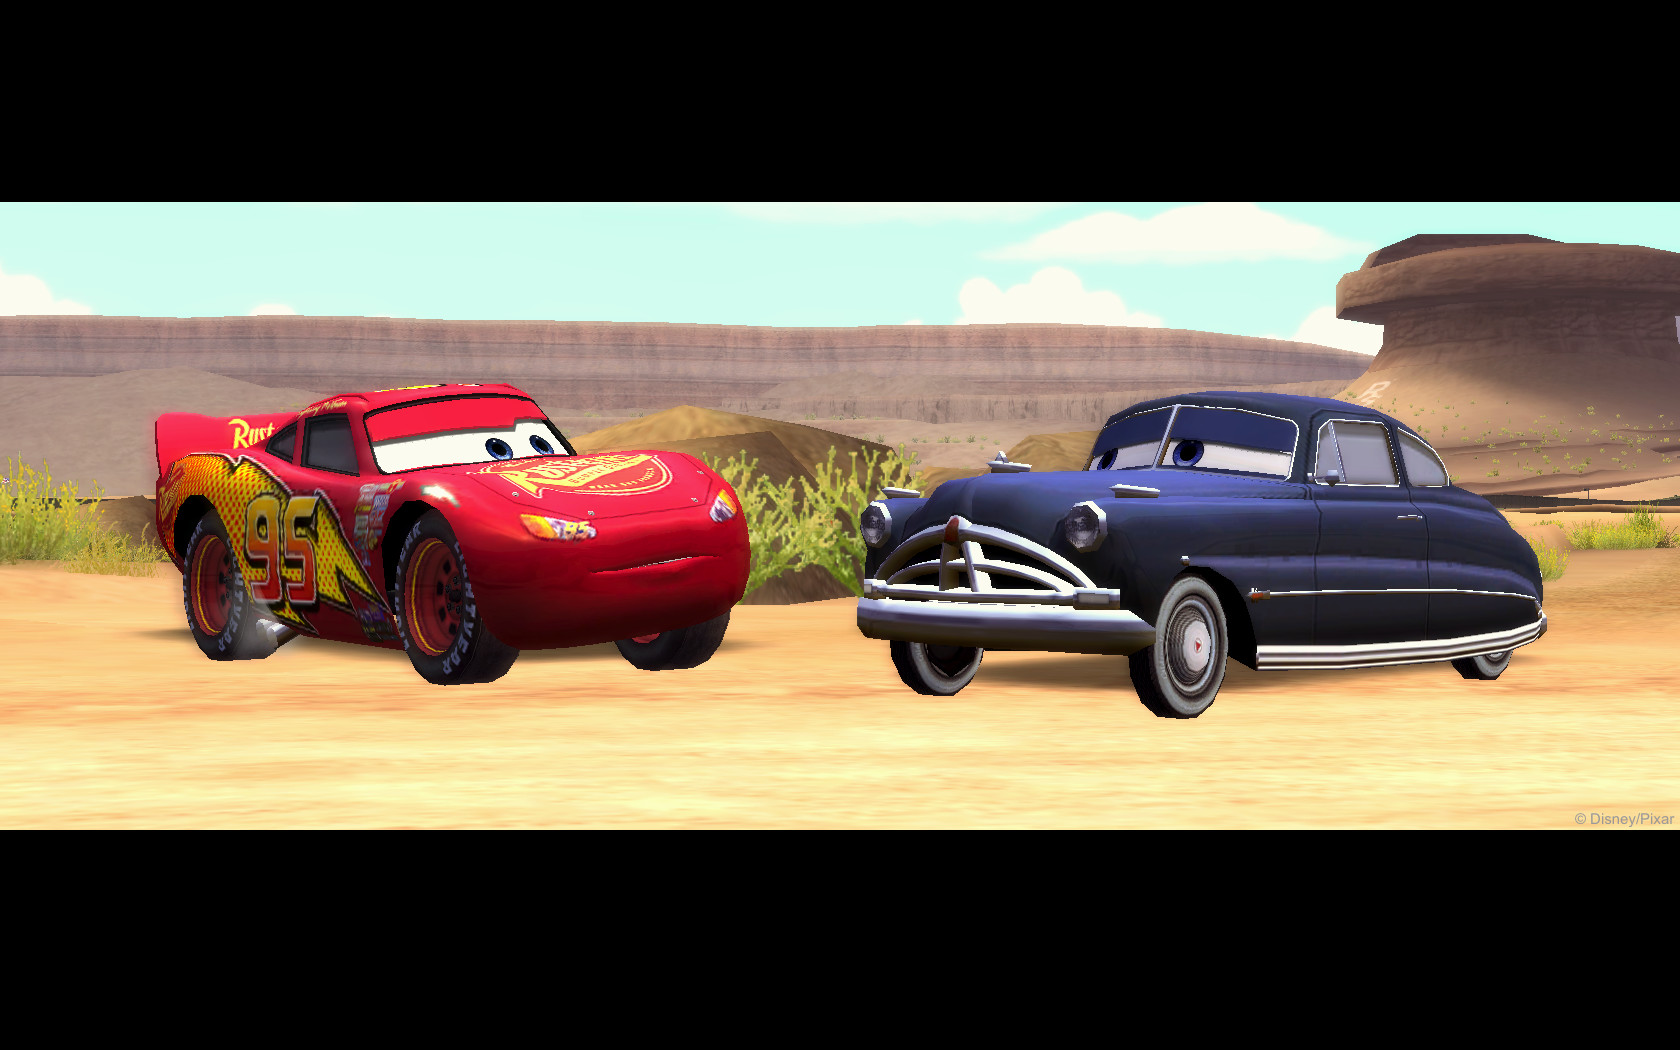  Disney Pixar Cars